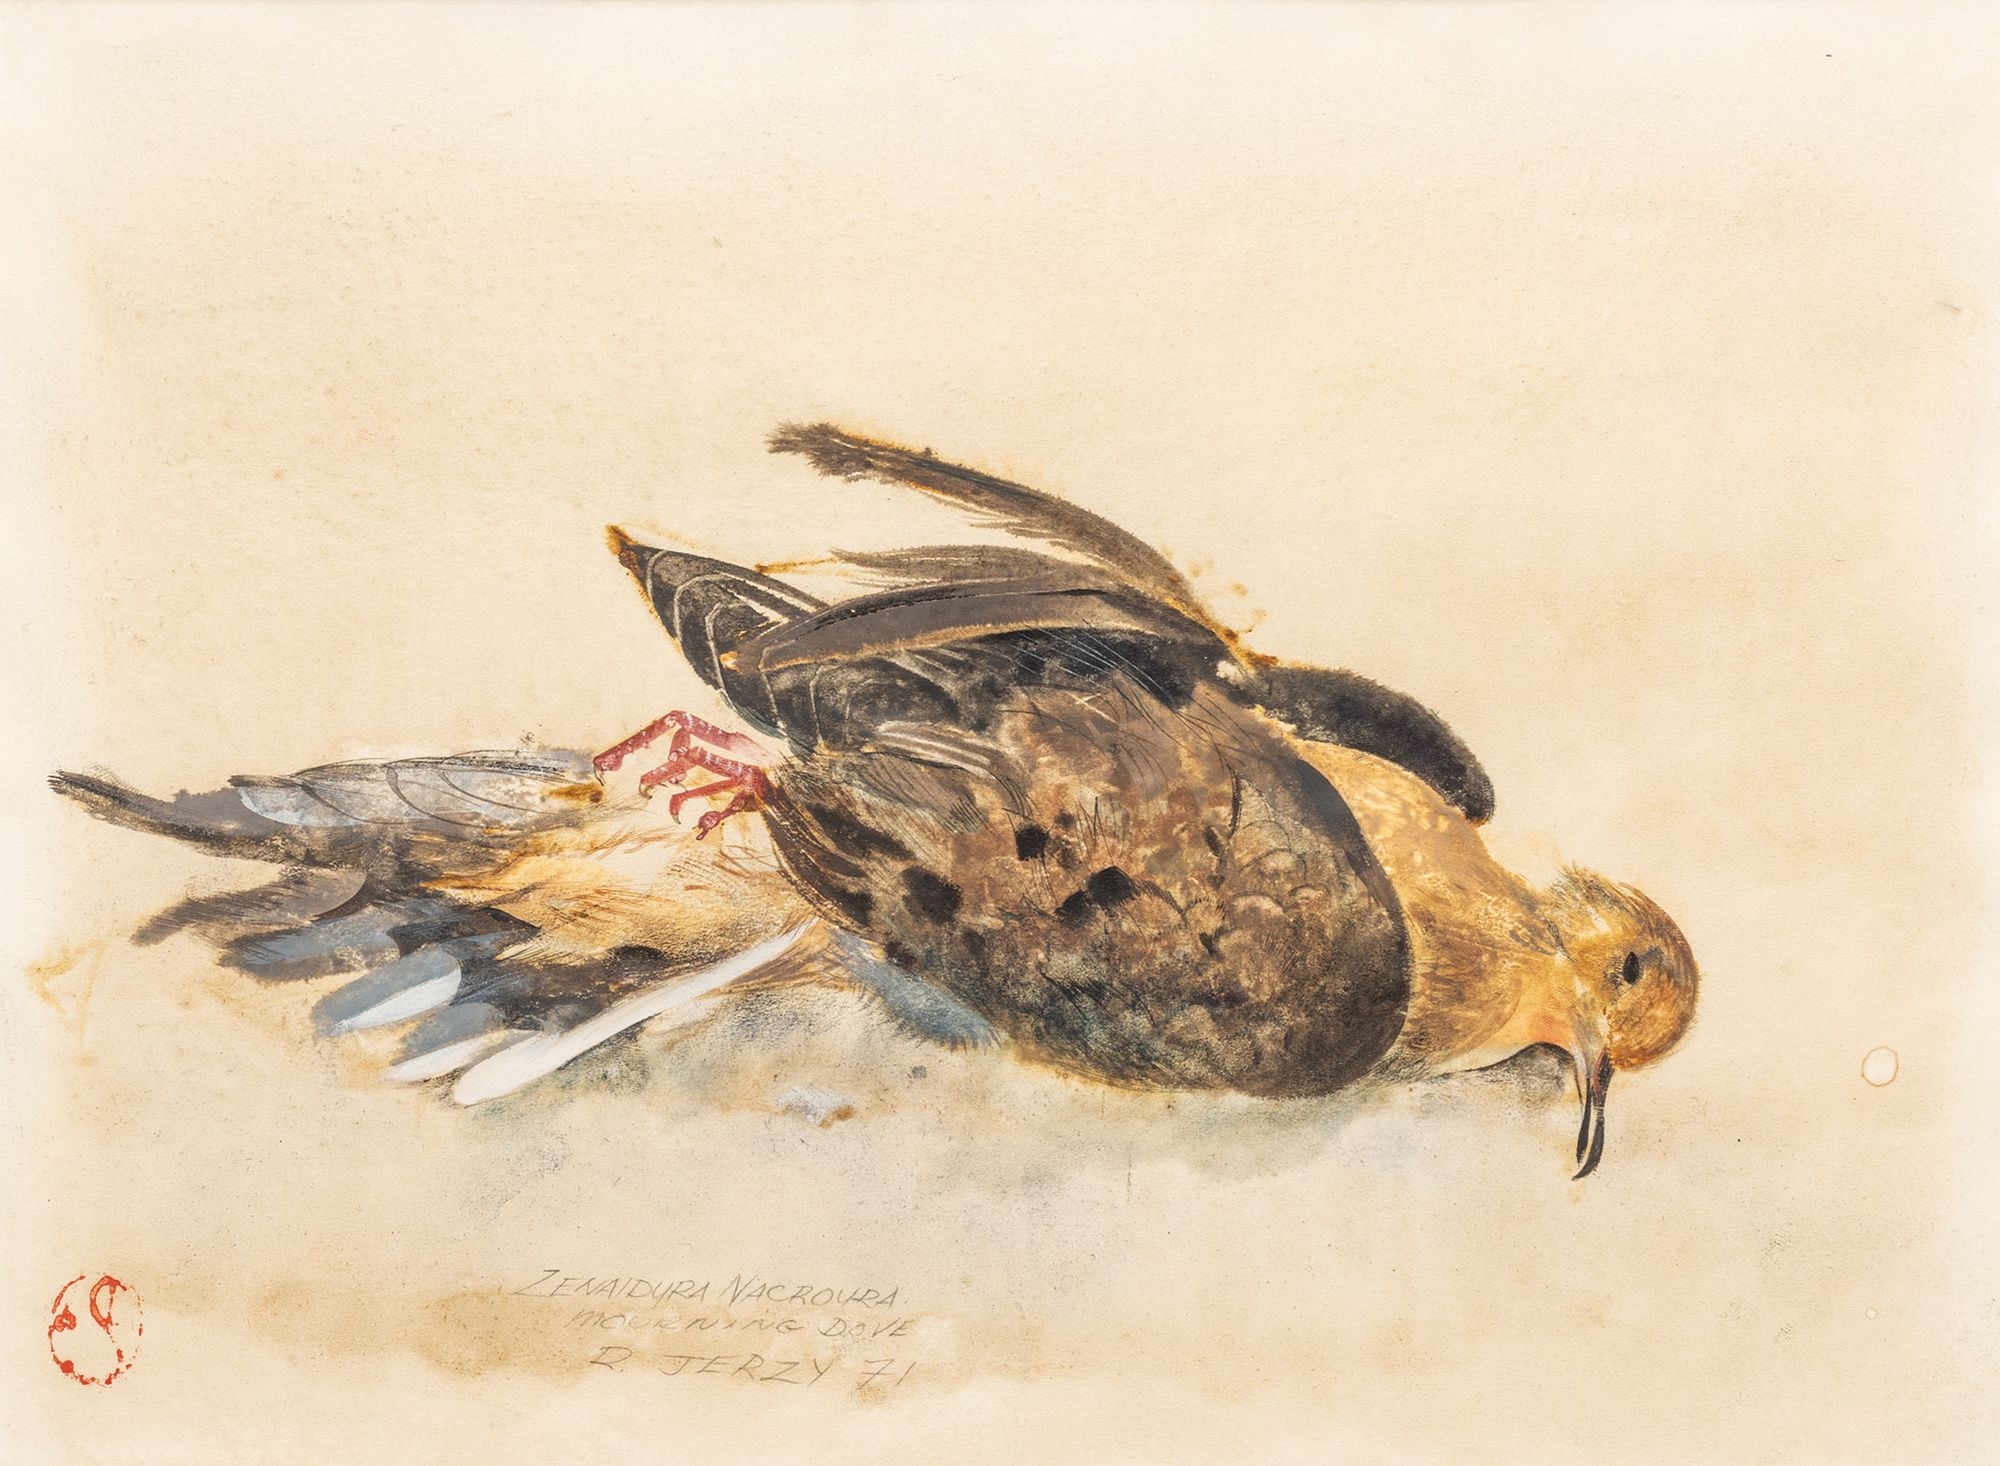 Richard Jerzy (American, 1943-2001) Watercolor on Paper, Mourning Dove--Zenaidura Macroura, 1971, H 10.5" W 14.25 by Richard Jerzy, 1971